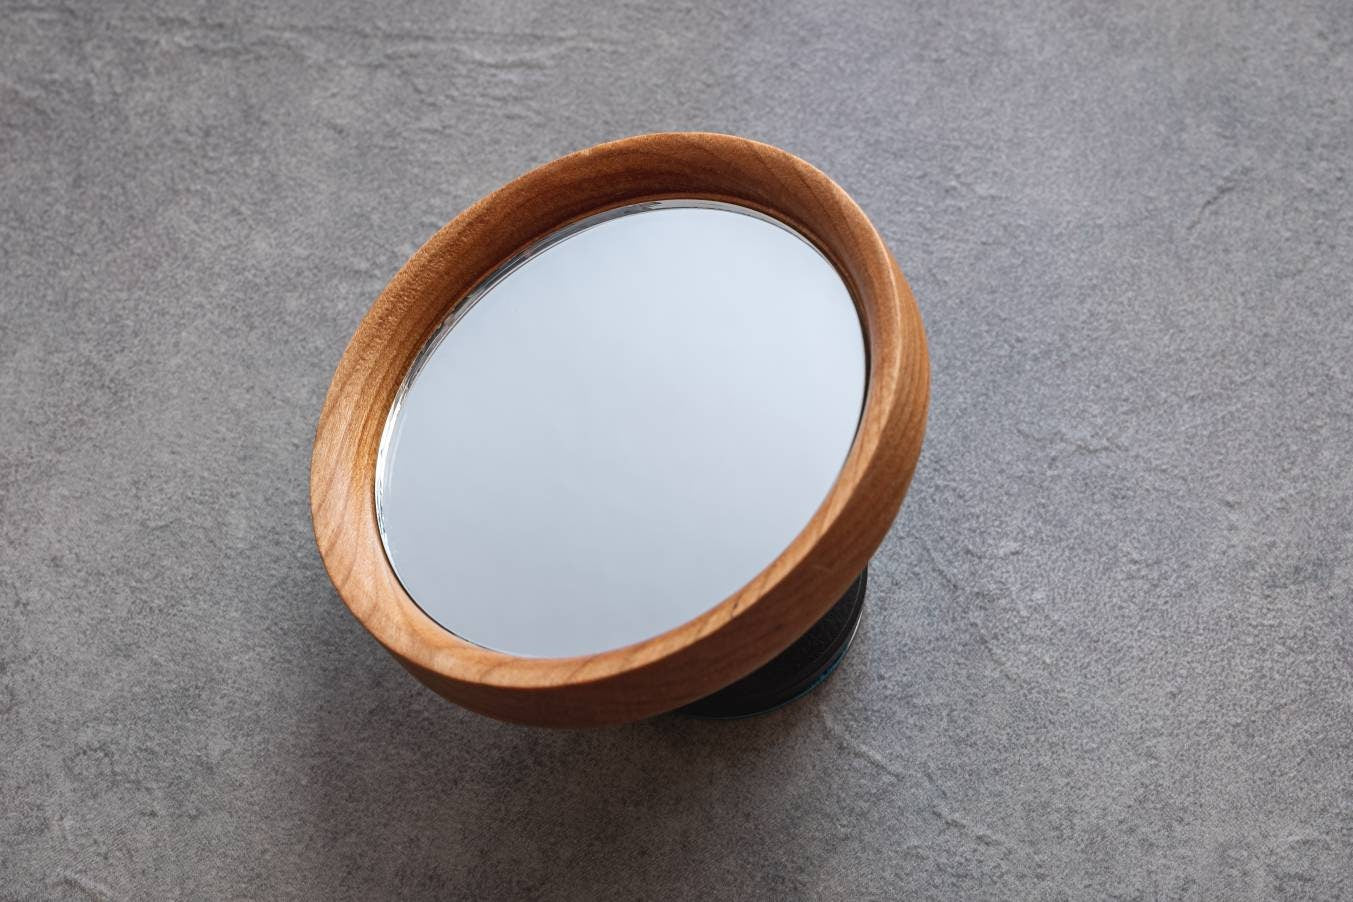 Miniature Shot Pulling Mirror for Viewing Portafilter Espresso Shots –  Sungaze Coffee